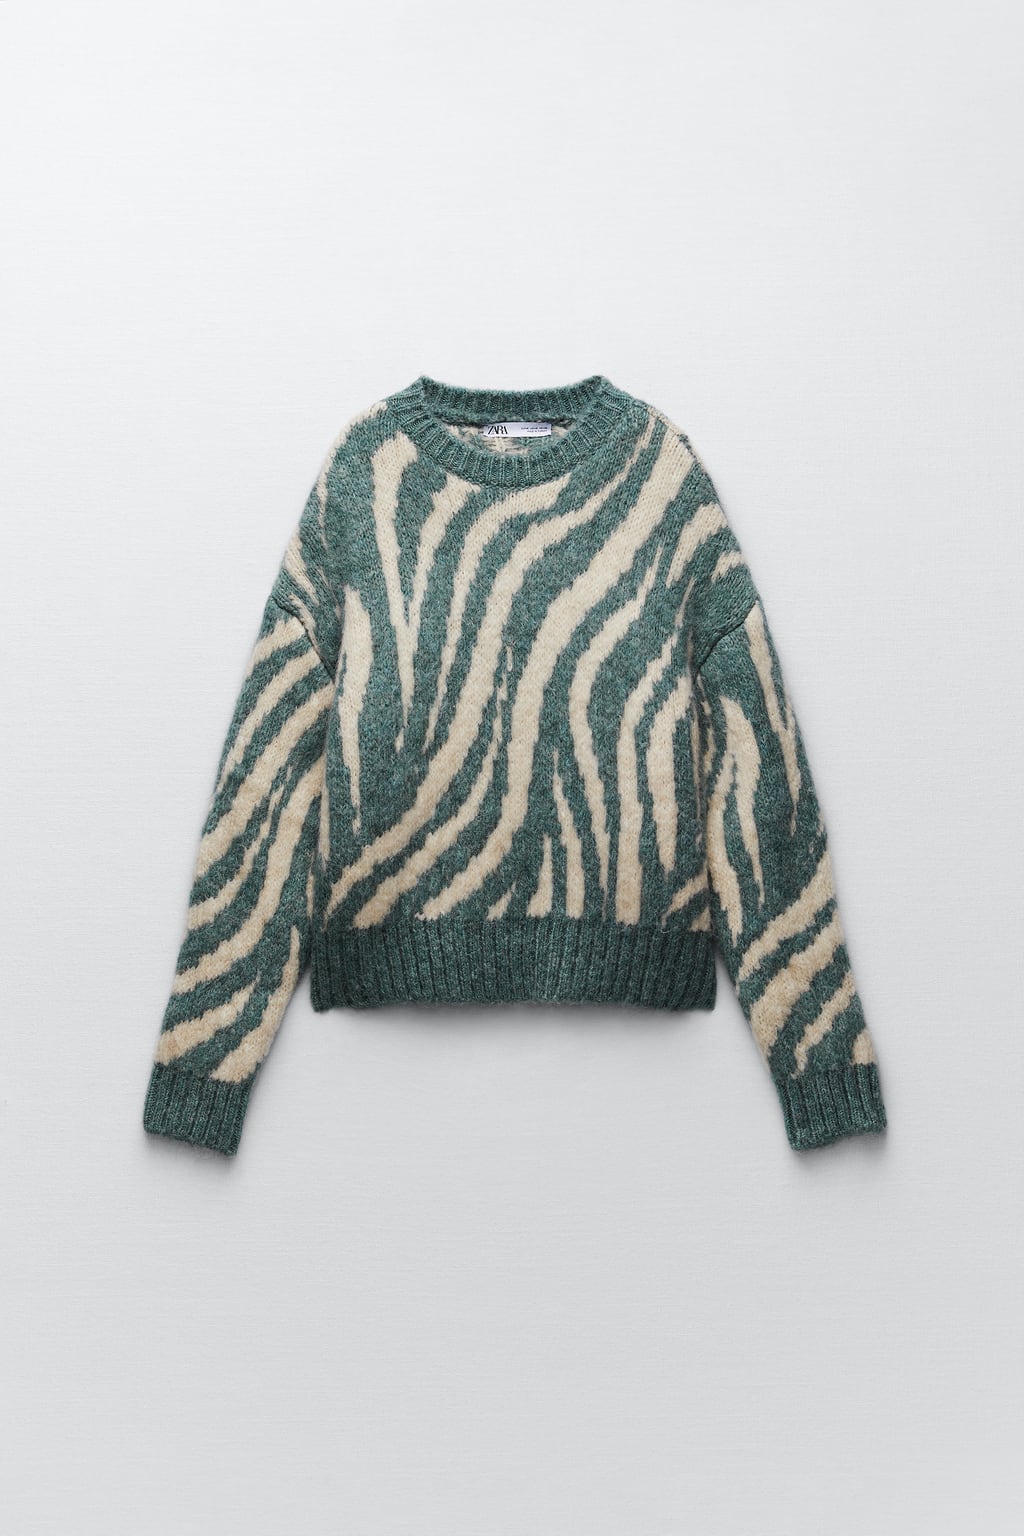 Zara Jacquard Animal Print Knit Sweater